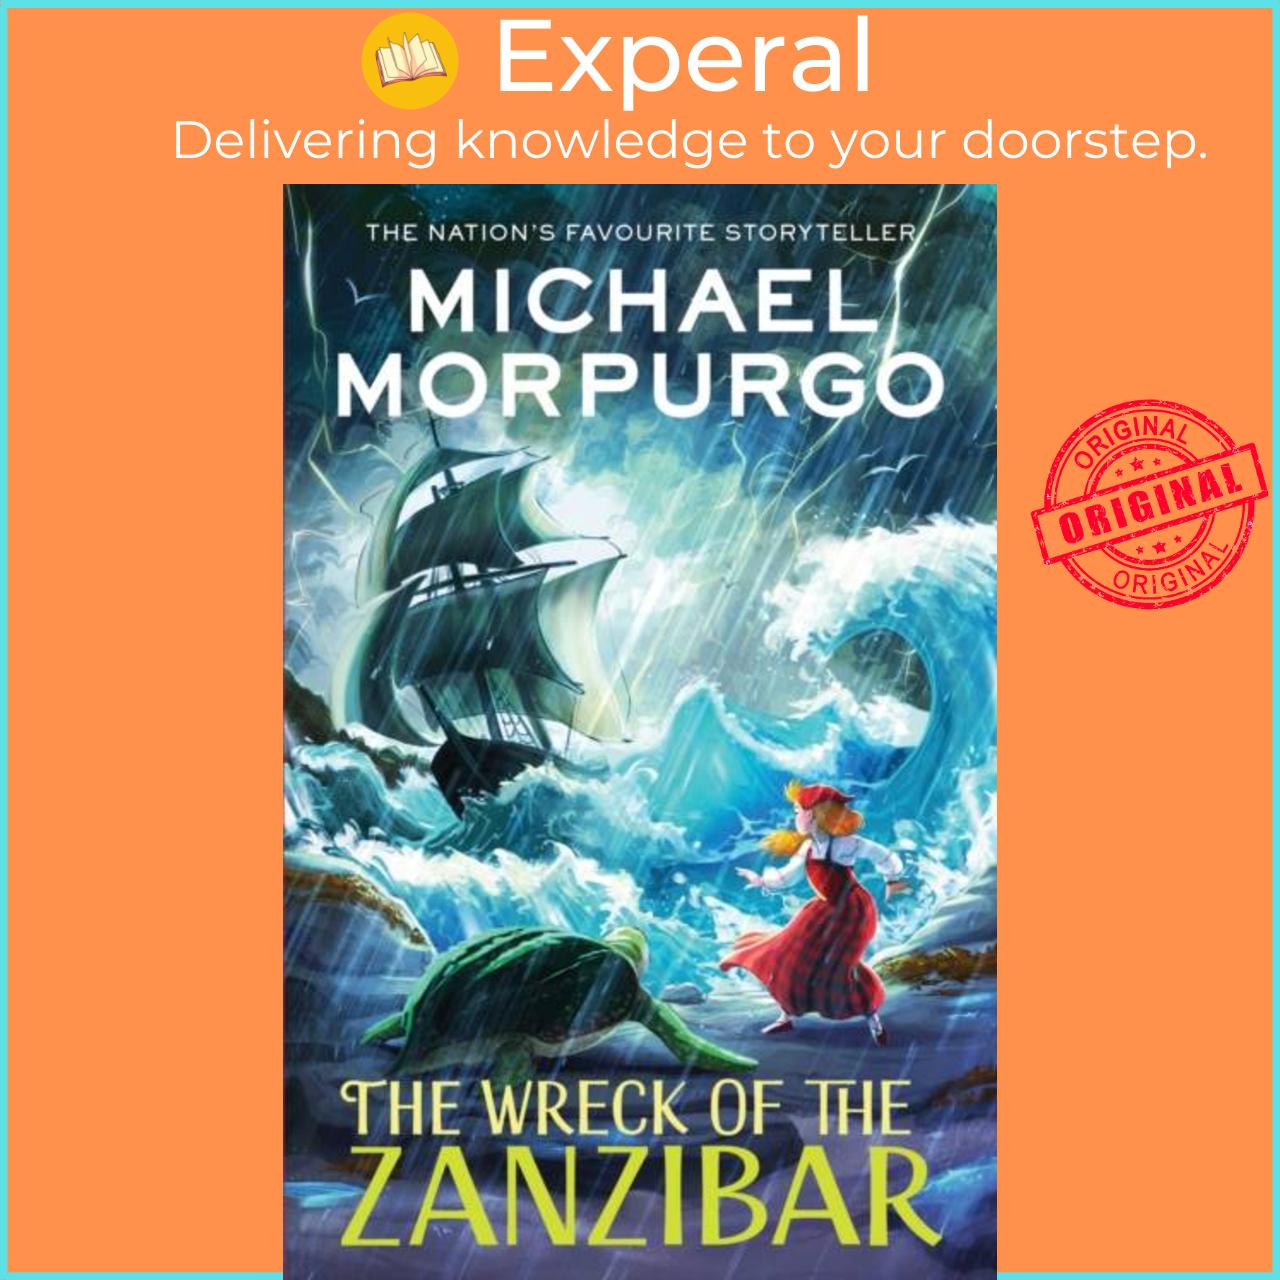 Sách - The Wreck of the Zanzibar by Michael Morpurgo (UK edition, paperback)